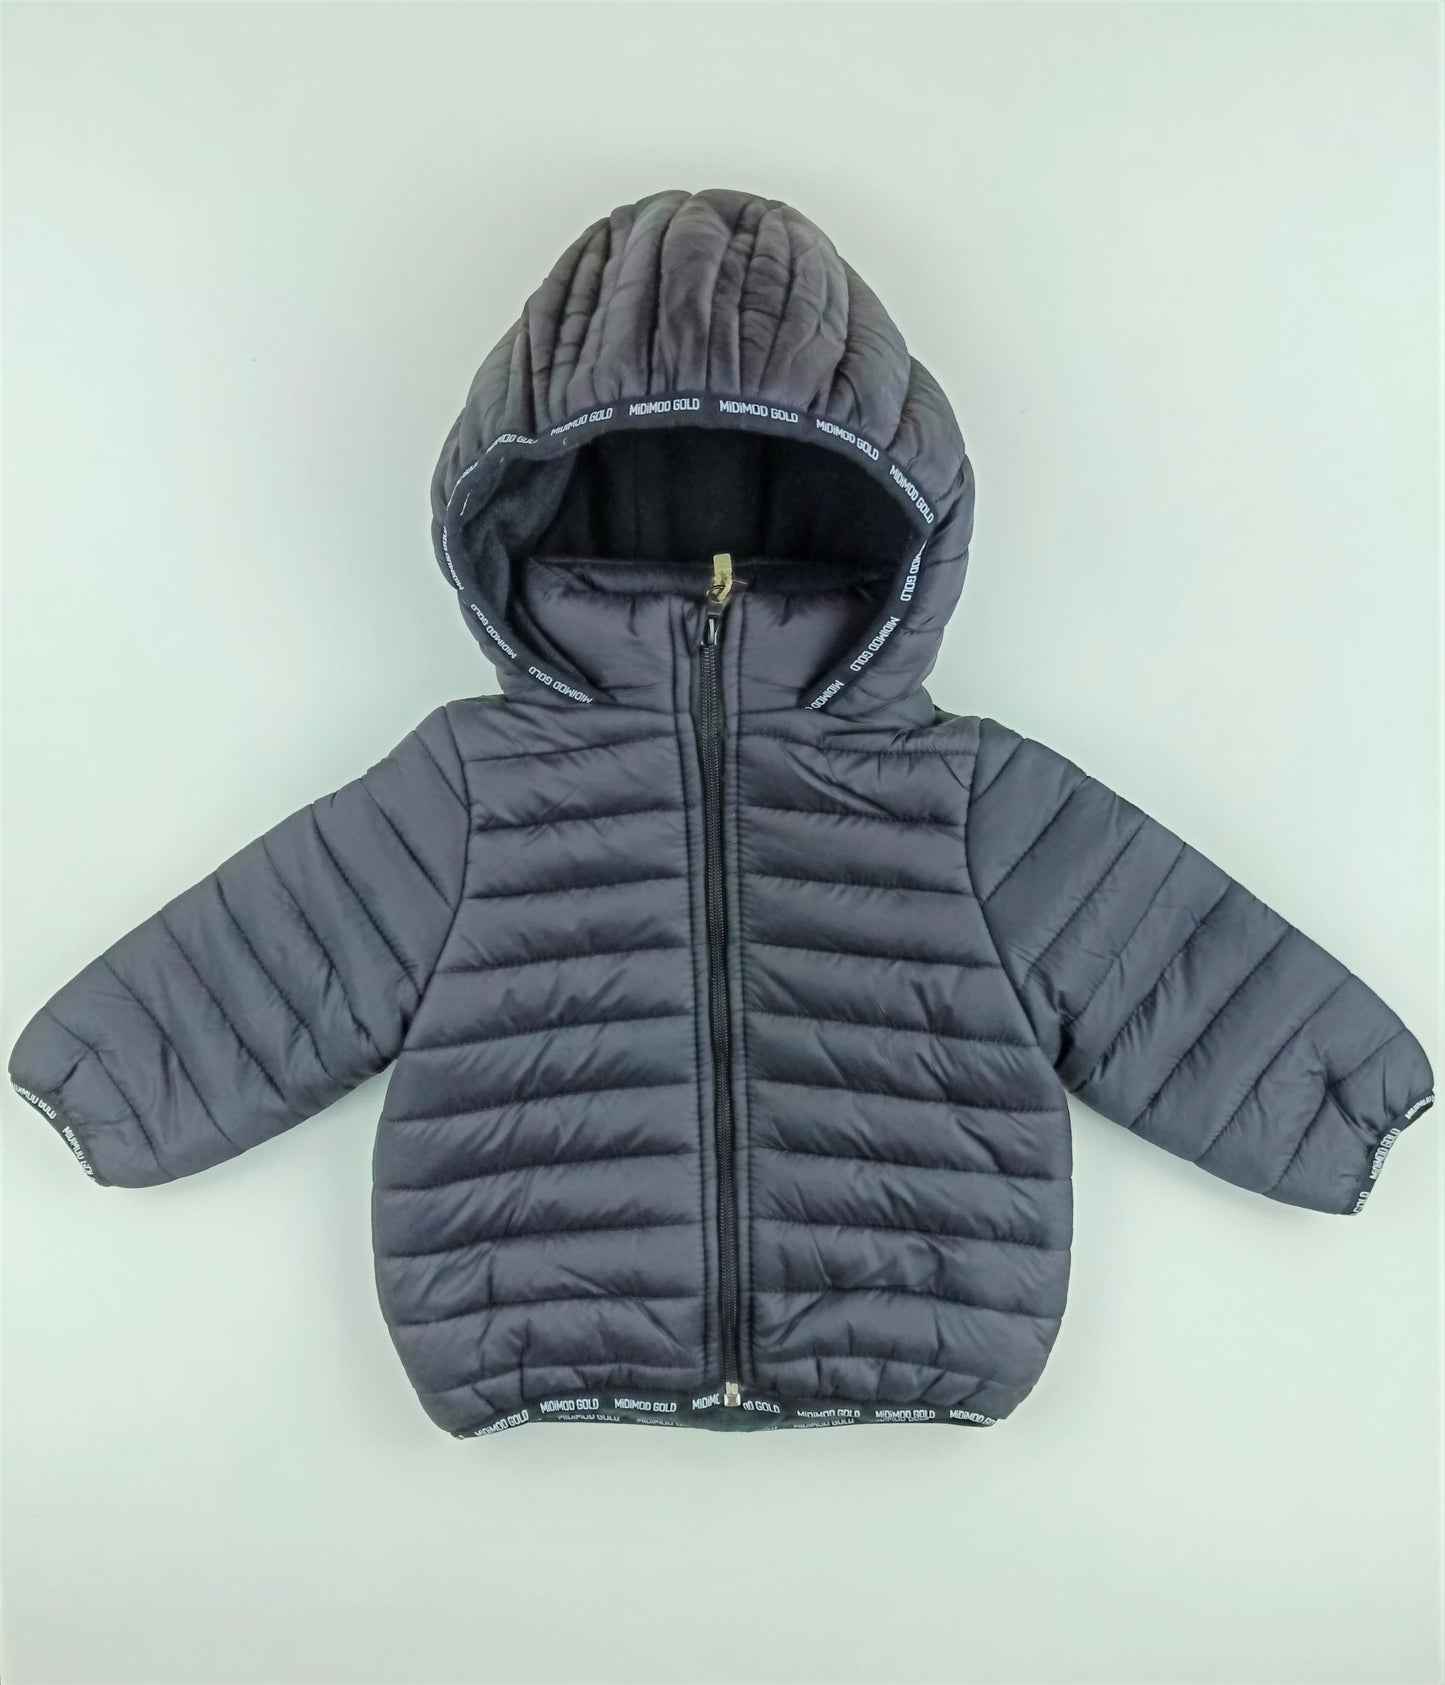 Basic fleece lined puffer jacket